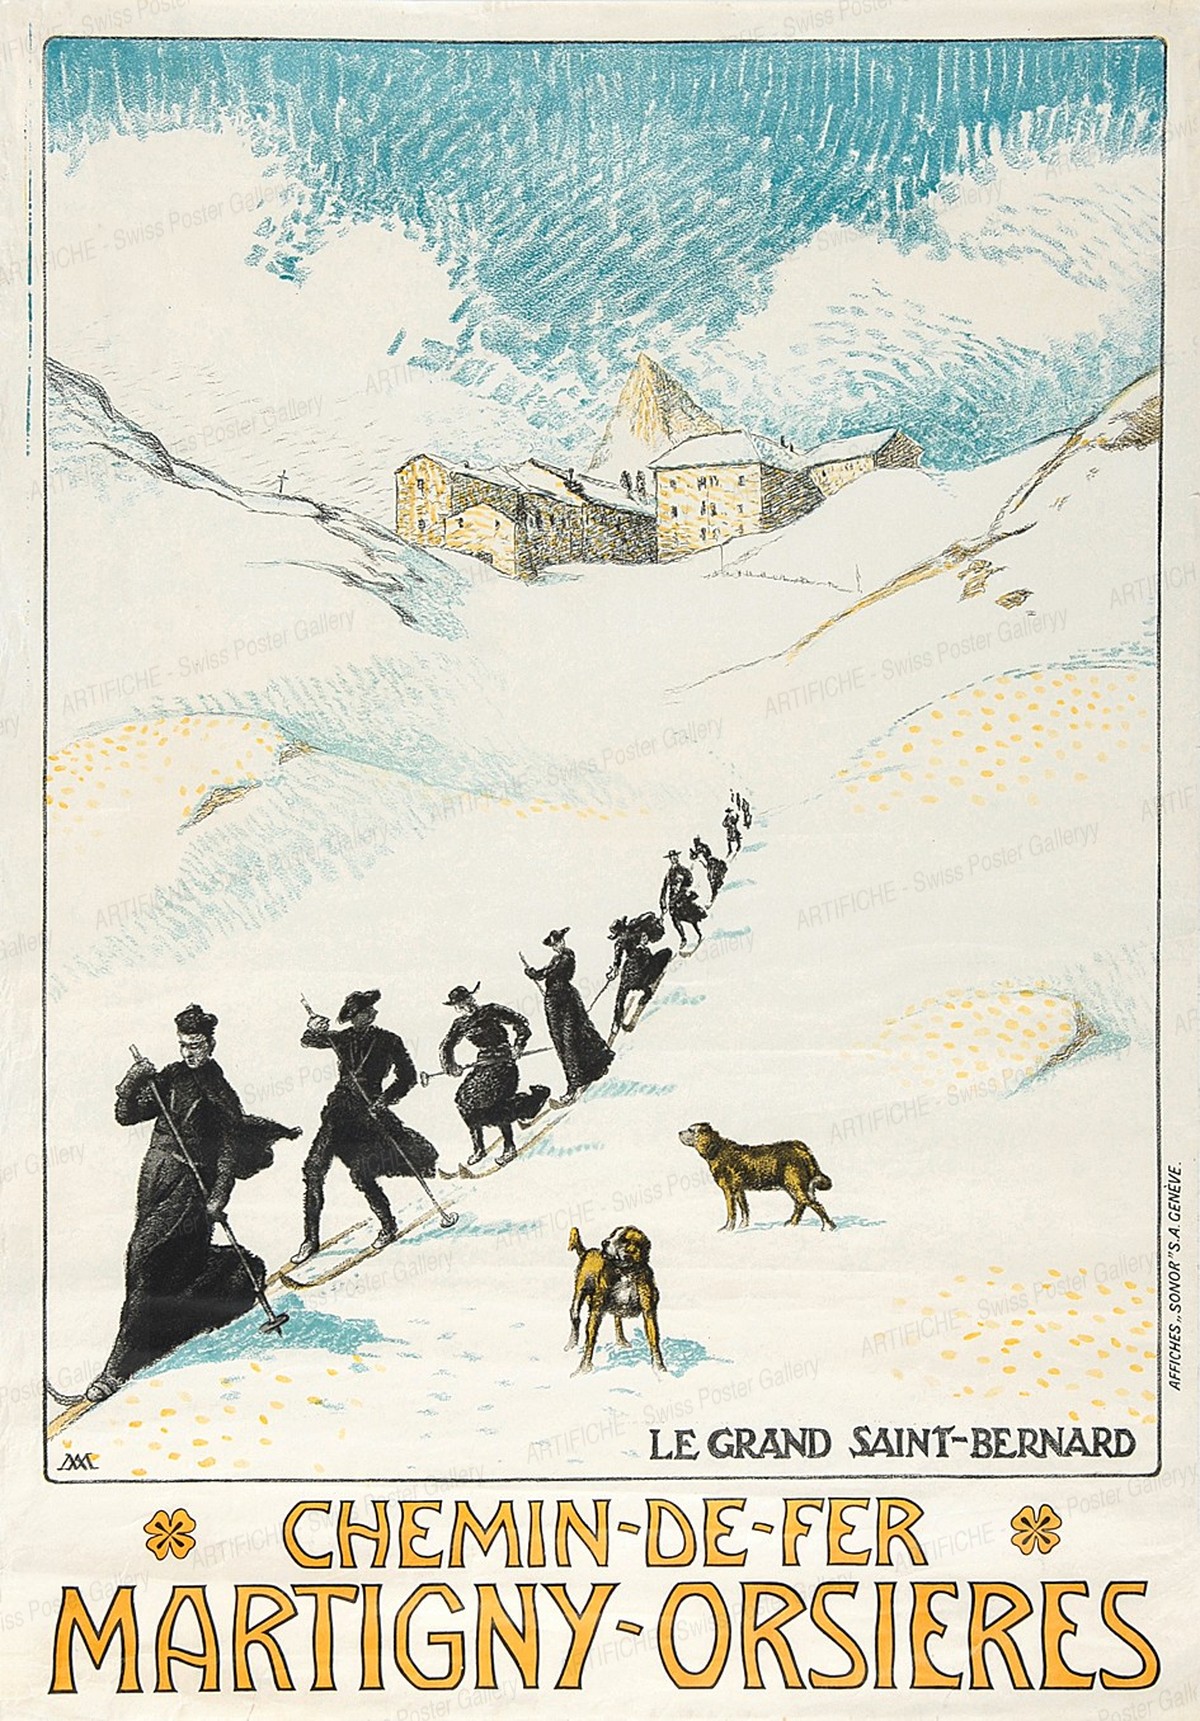 Chemin-de-Fer MARTIGNY-ORSIÈRES – Le grand Saint-Bernard, Albert Jacques Marc Muret